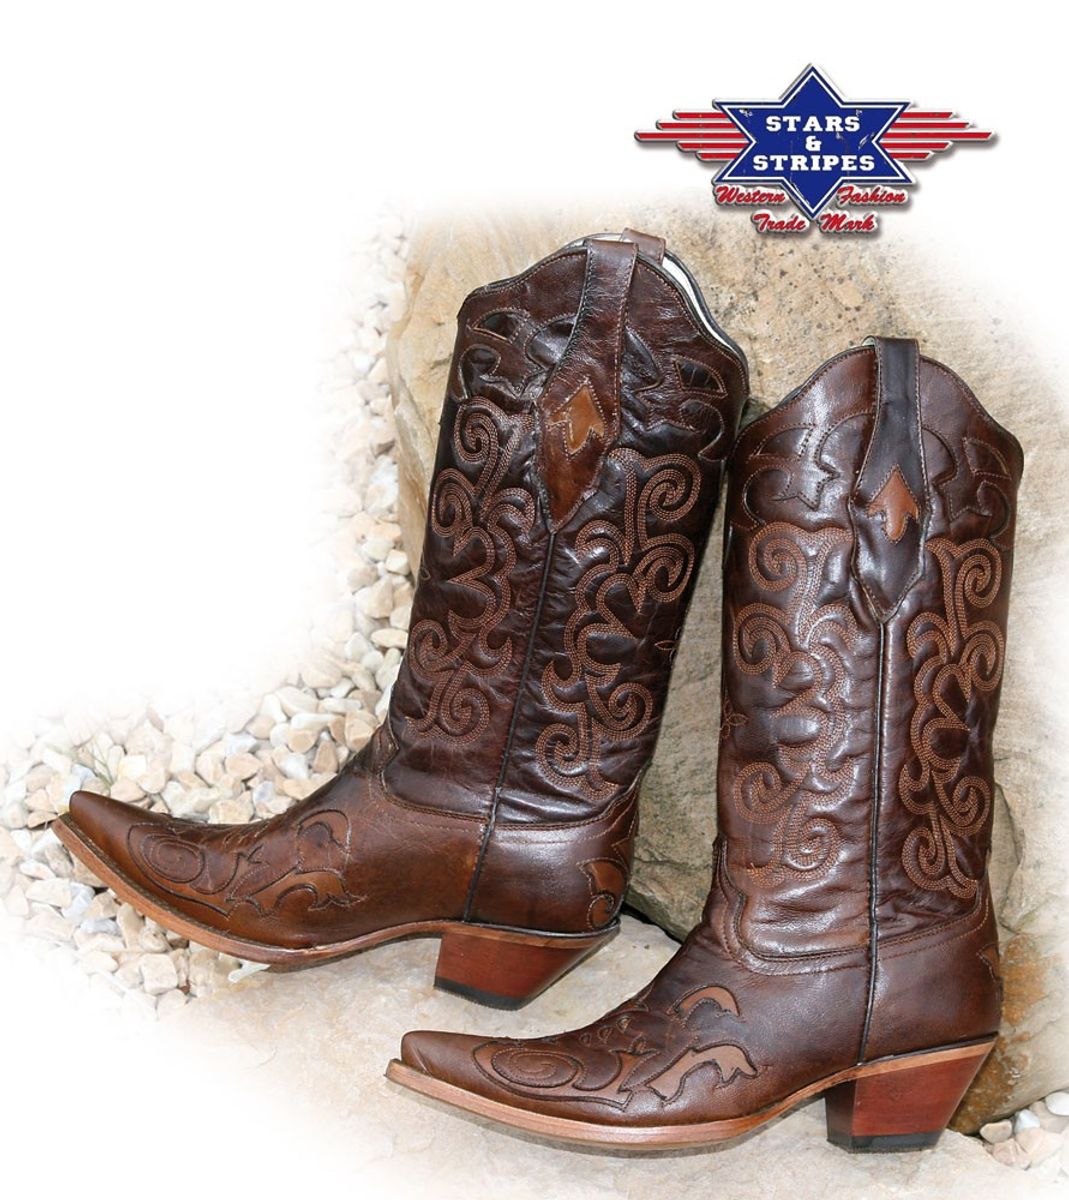 Cowboy boots WBL-03 lady str 36-41 KR 1450-,